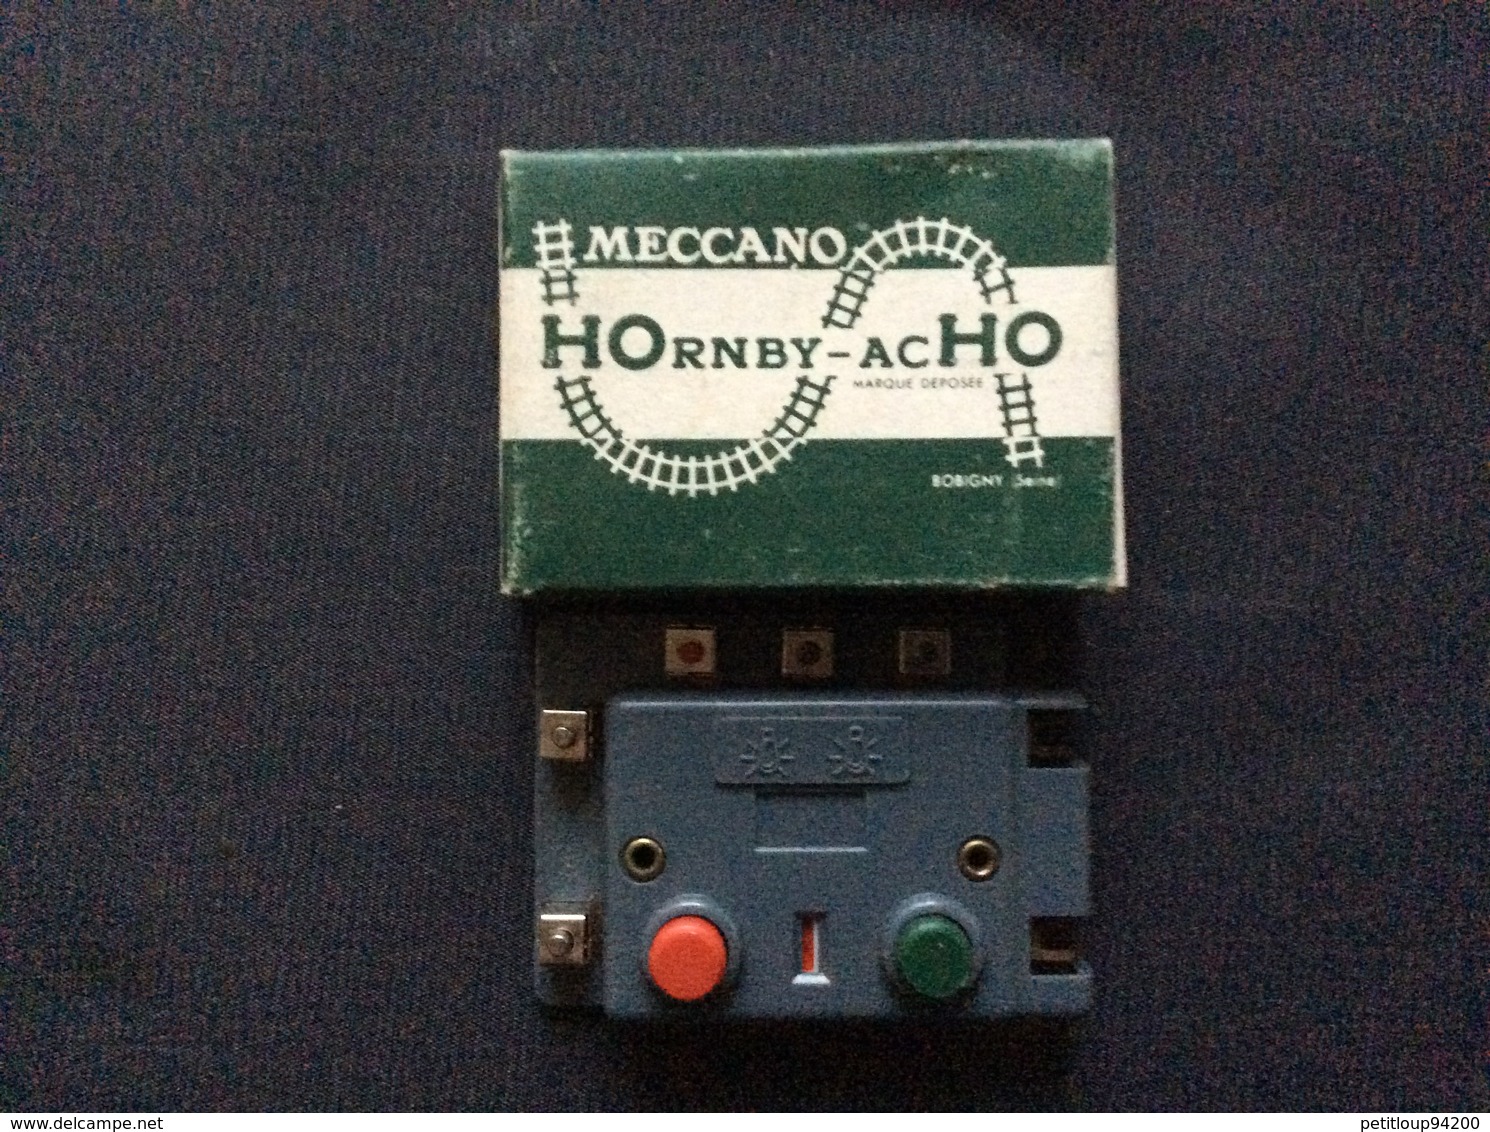 HORNBY-acHO MECCANO-TRIANG 1 Boîtier De Commande A Contact Permanent  Ref. 7840 - Digitale Artikels En Toebehoren